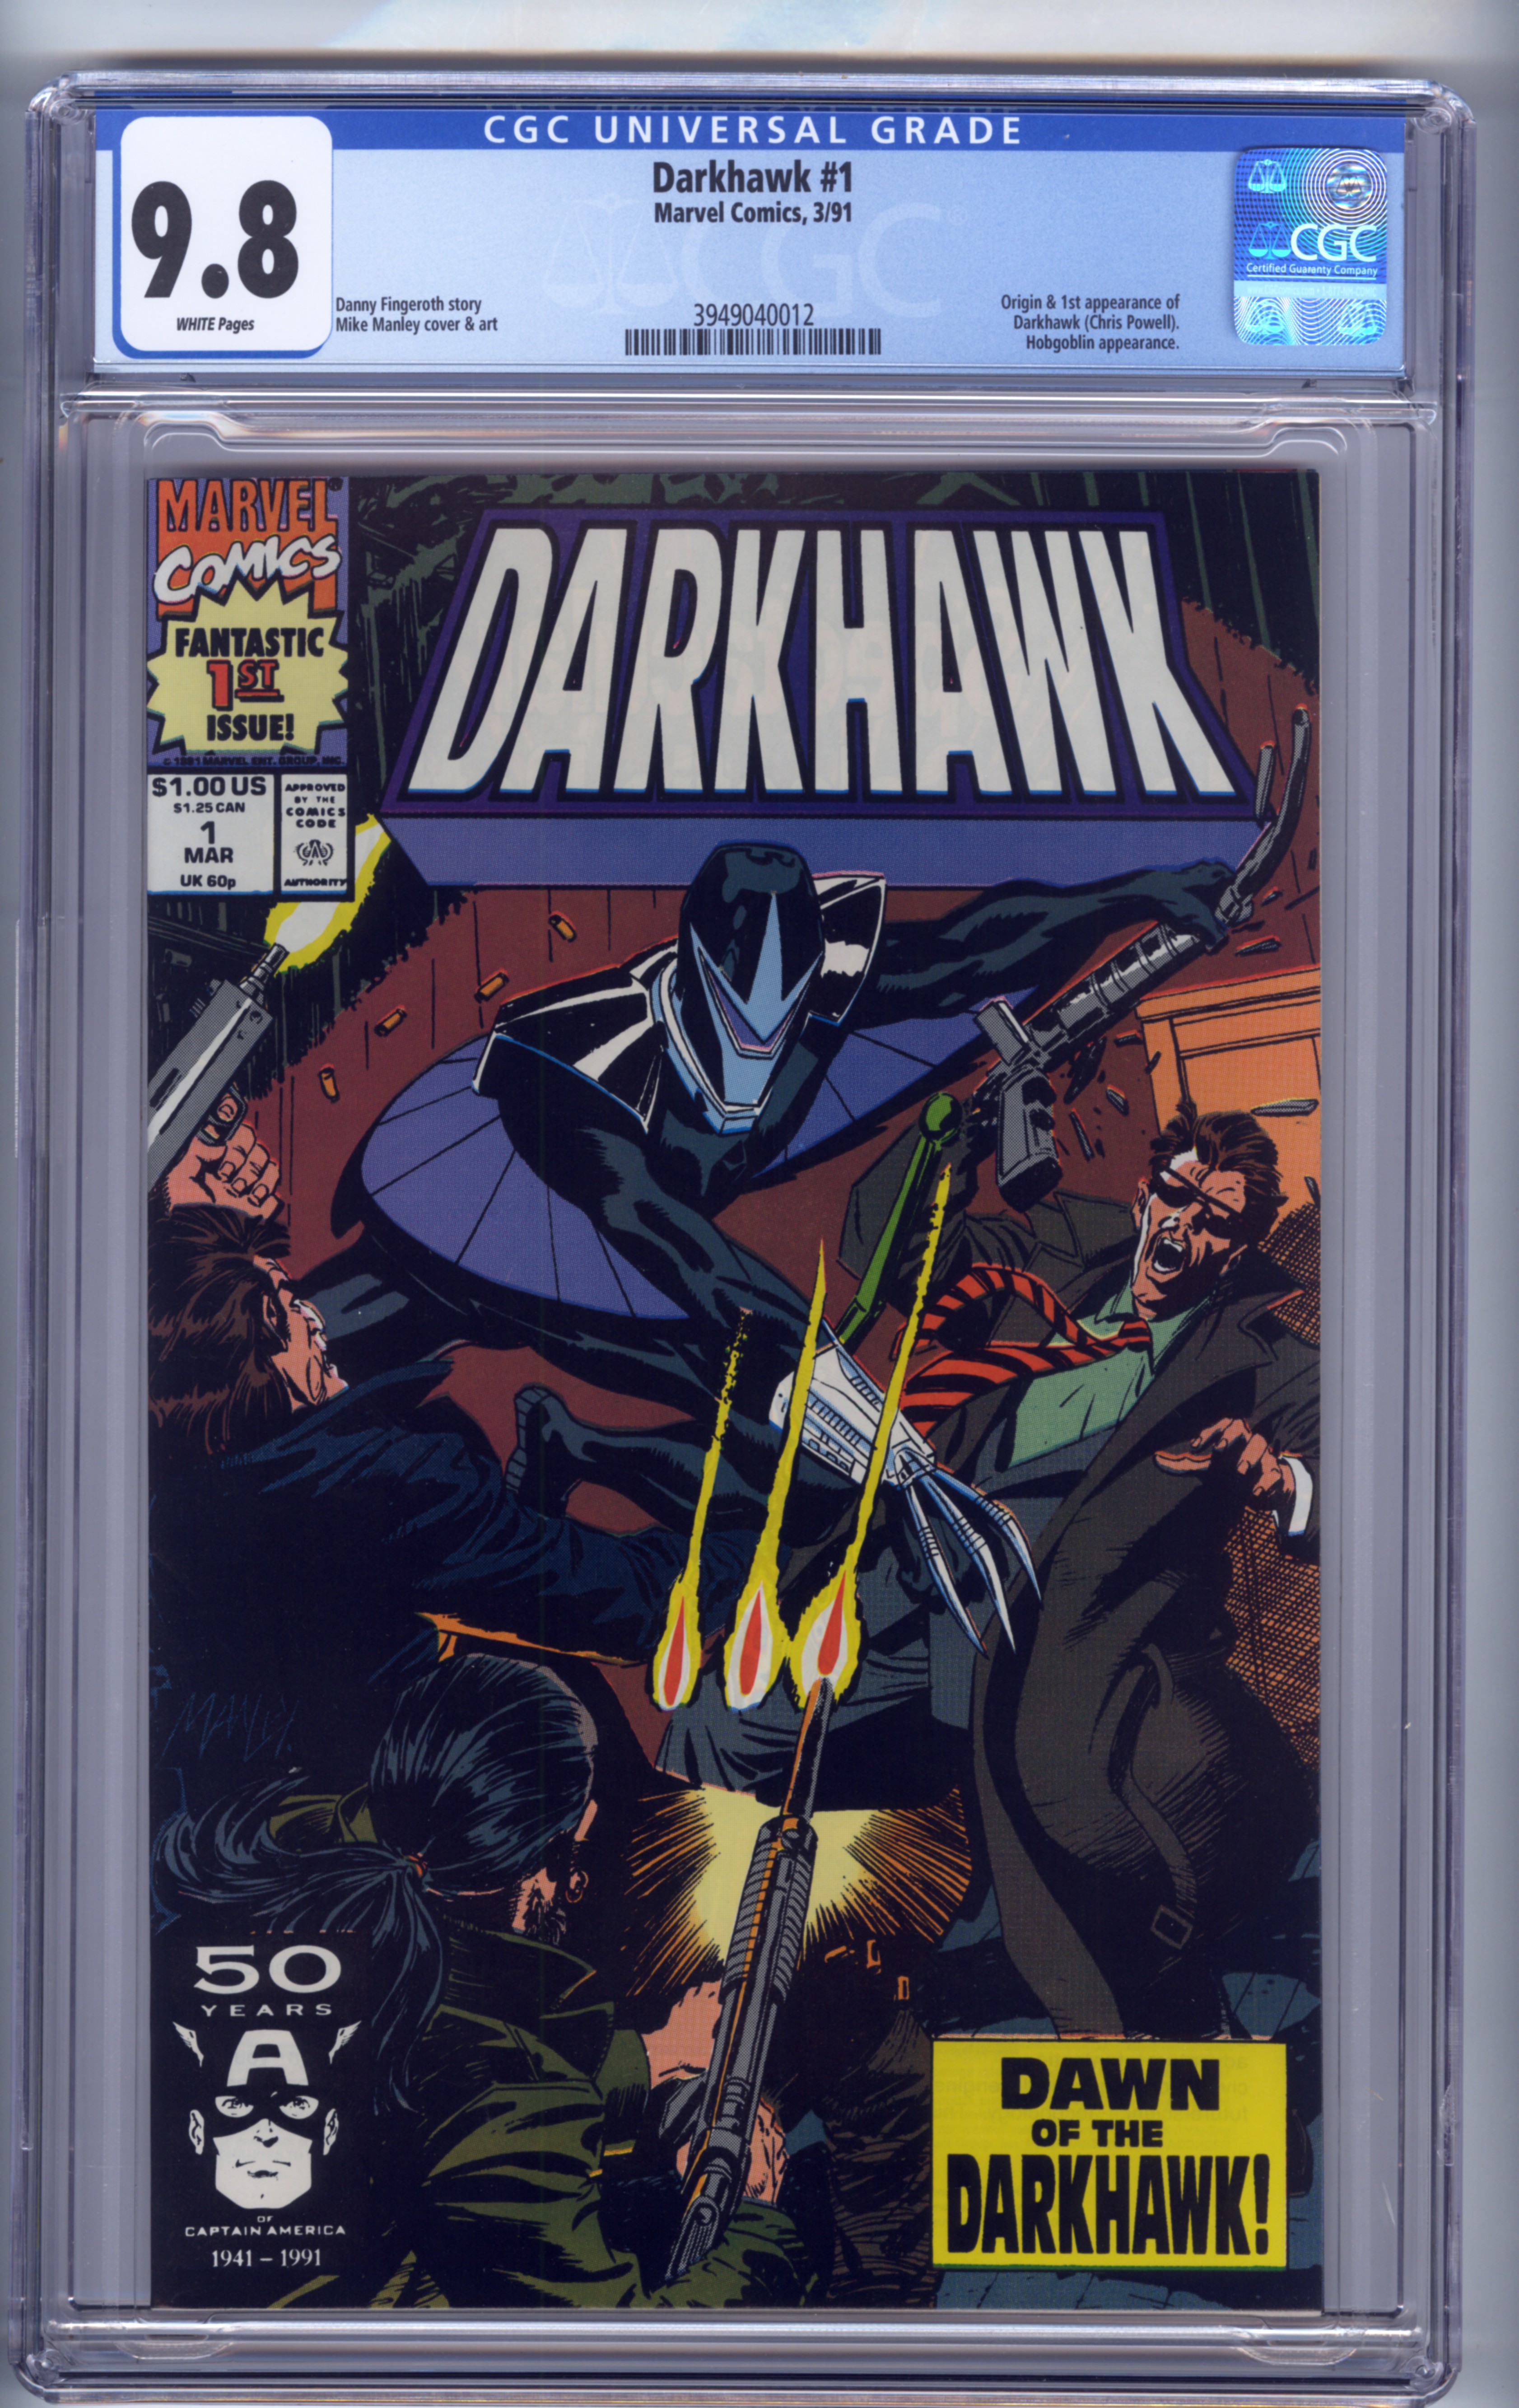 Darkhawk-1-394904012-fc.jpg